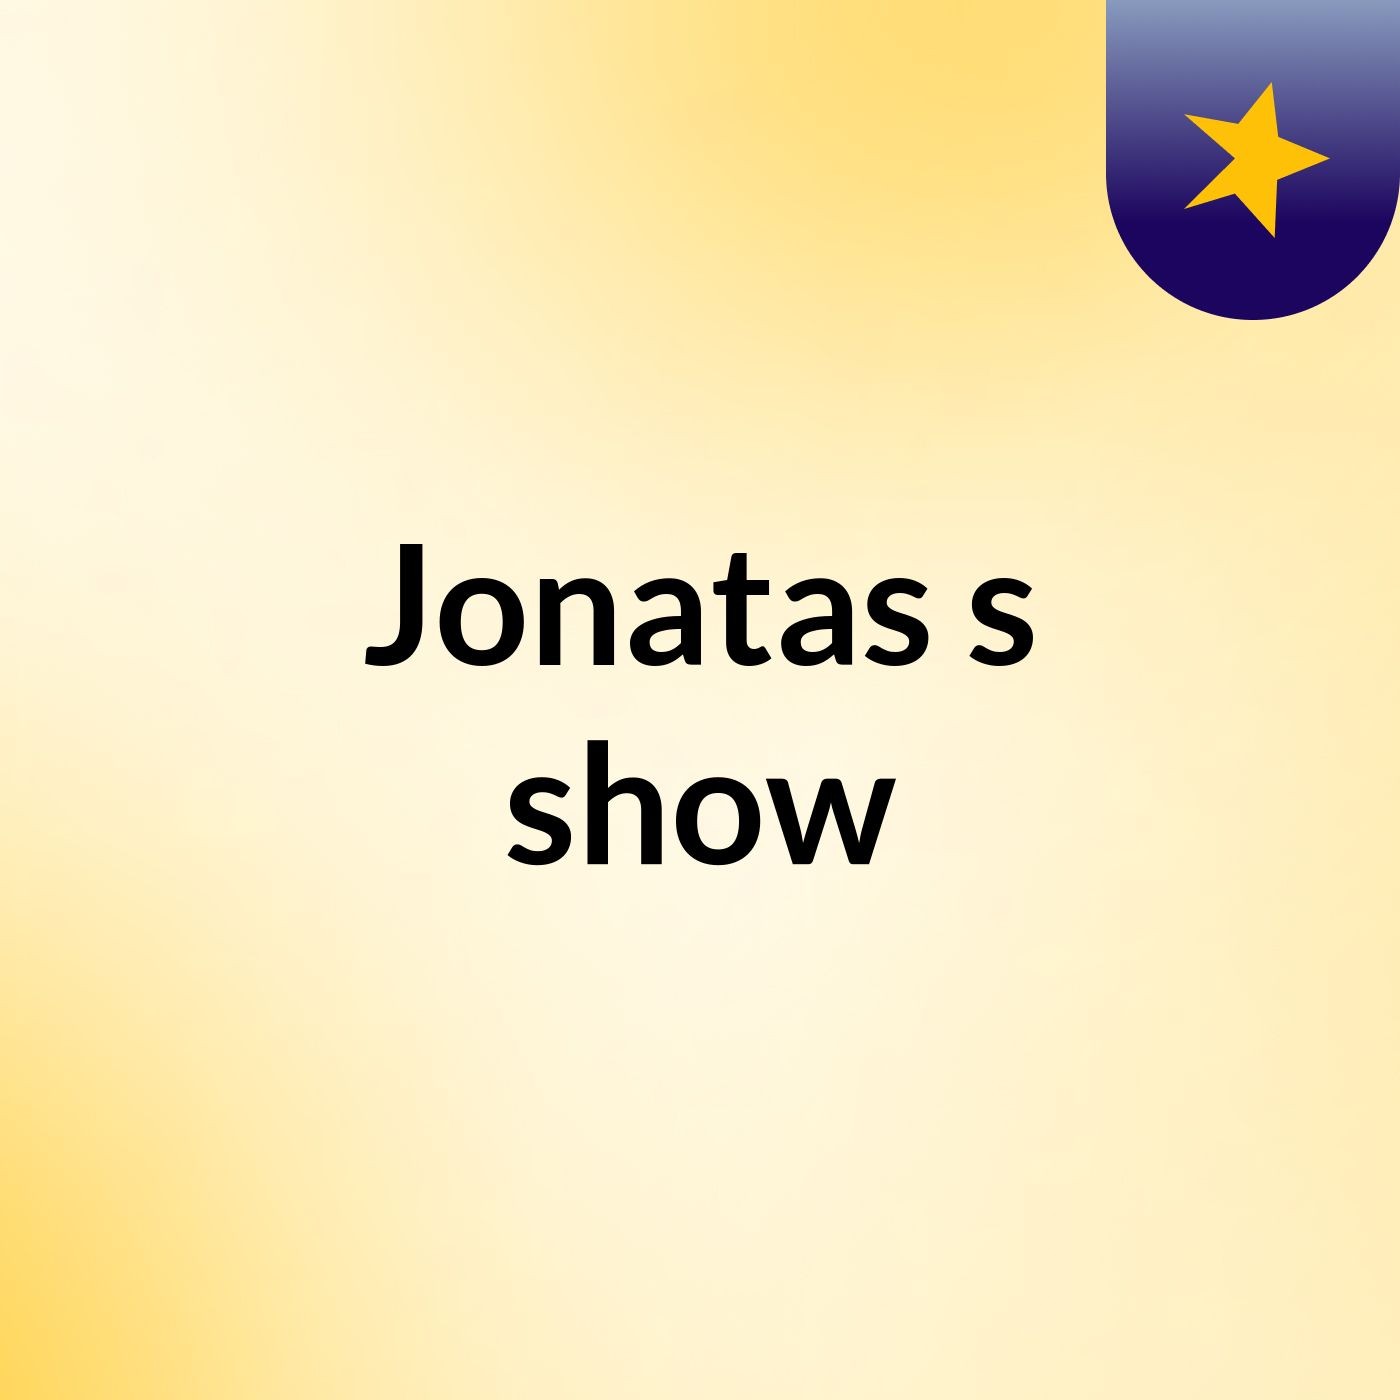 Jonatas's show